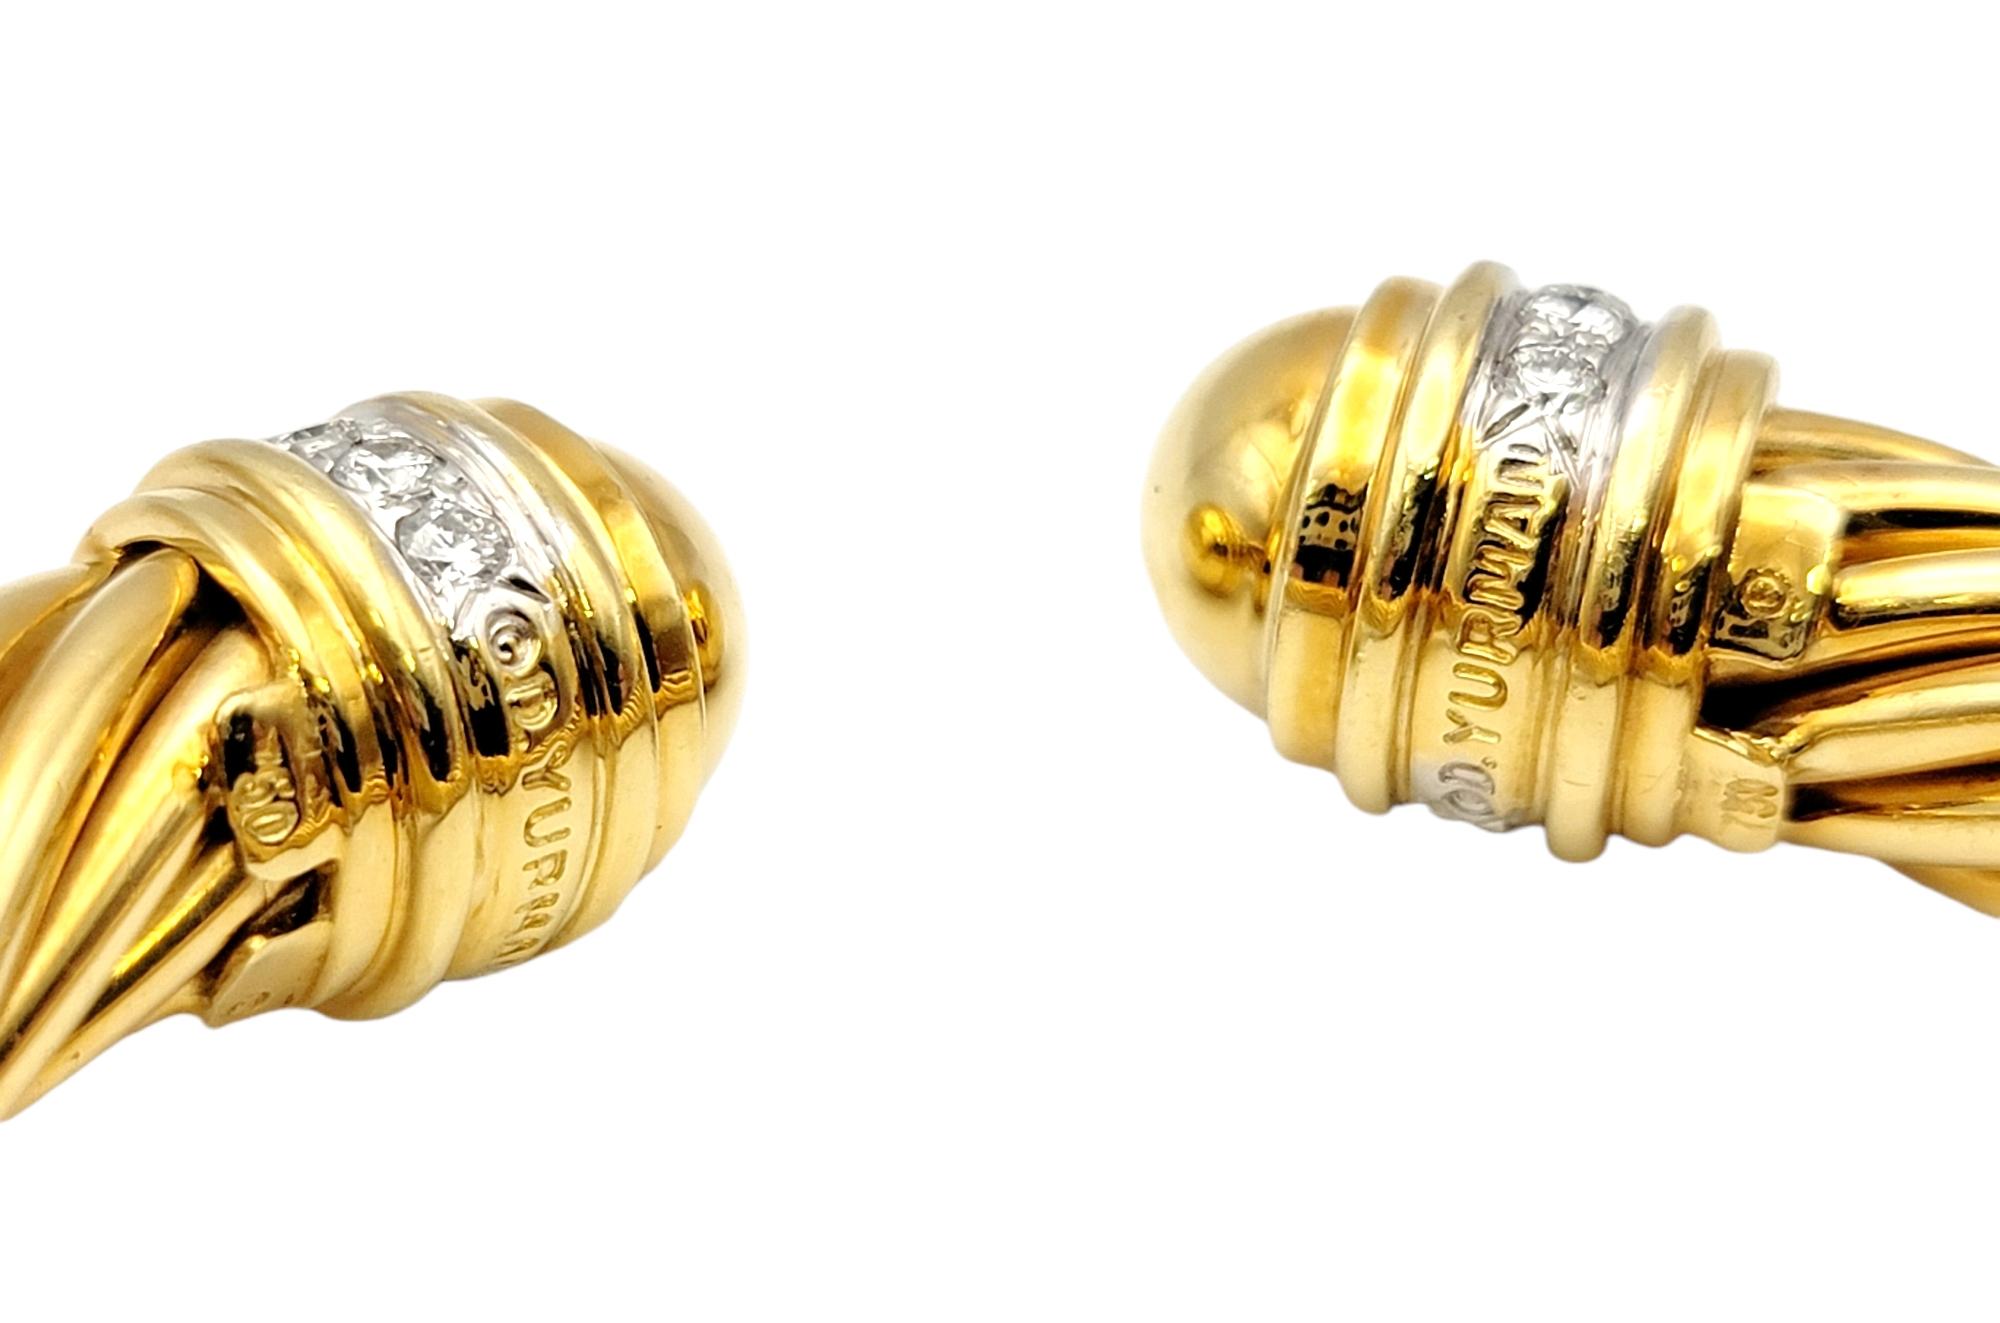 Contemporary David Yurman 18 Karat Yellow Gold Cable Twist Cuff Bracelet with Diamond Accents